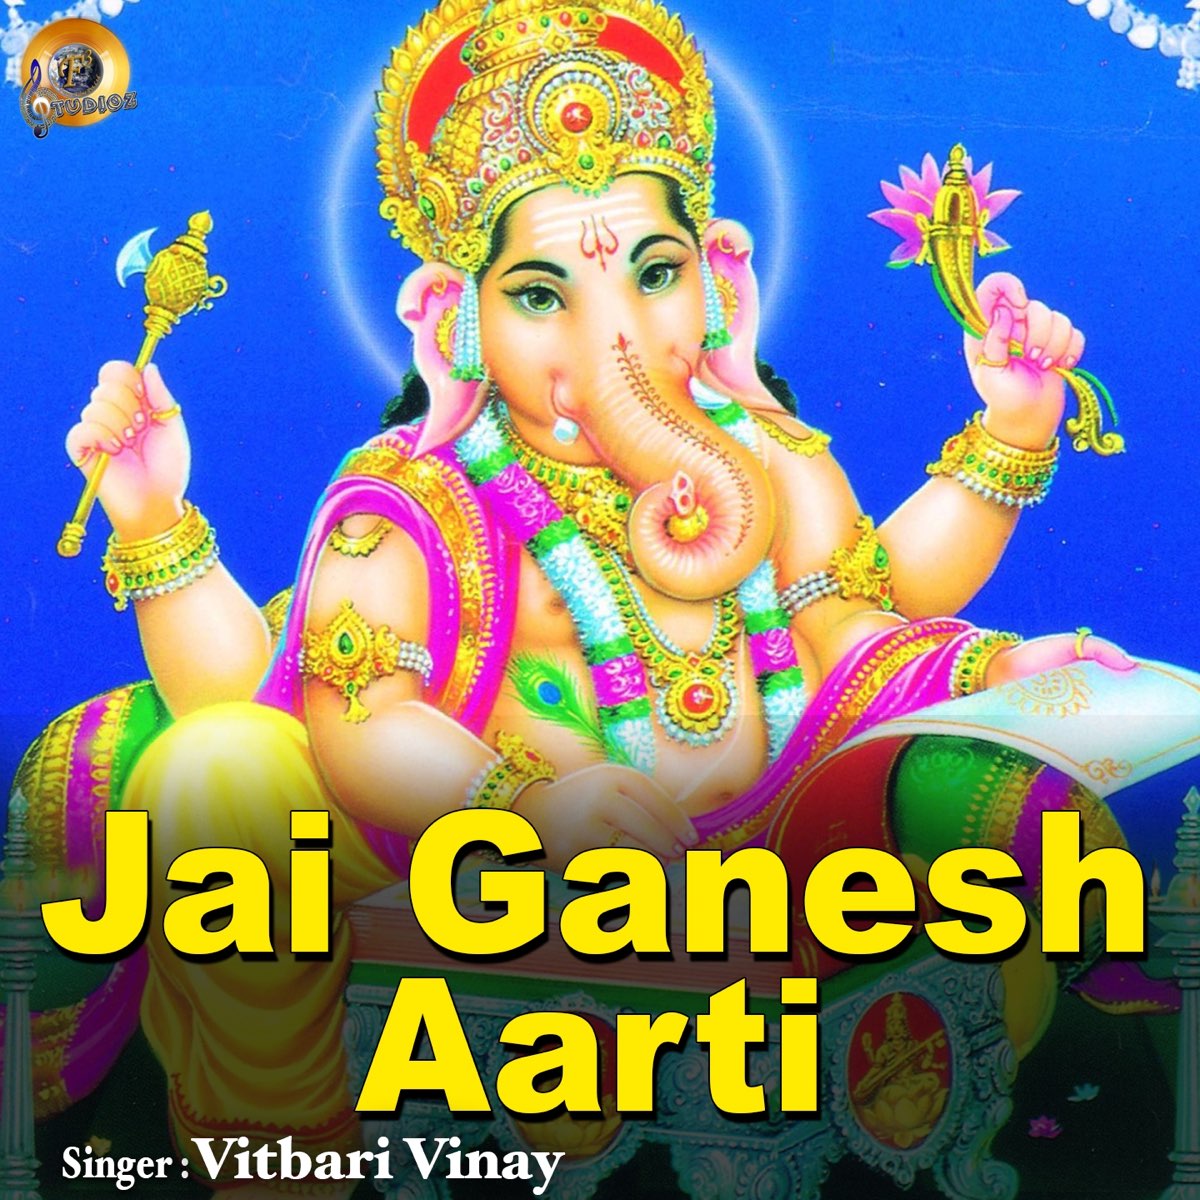 Jai Ganesh Aarti - Single by Vitbari Vinay on Apple Music